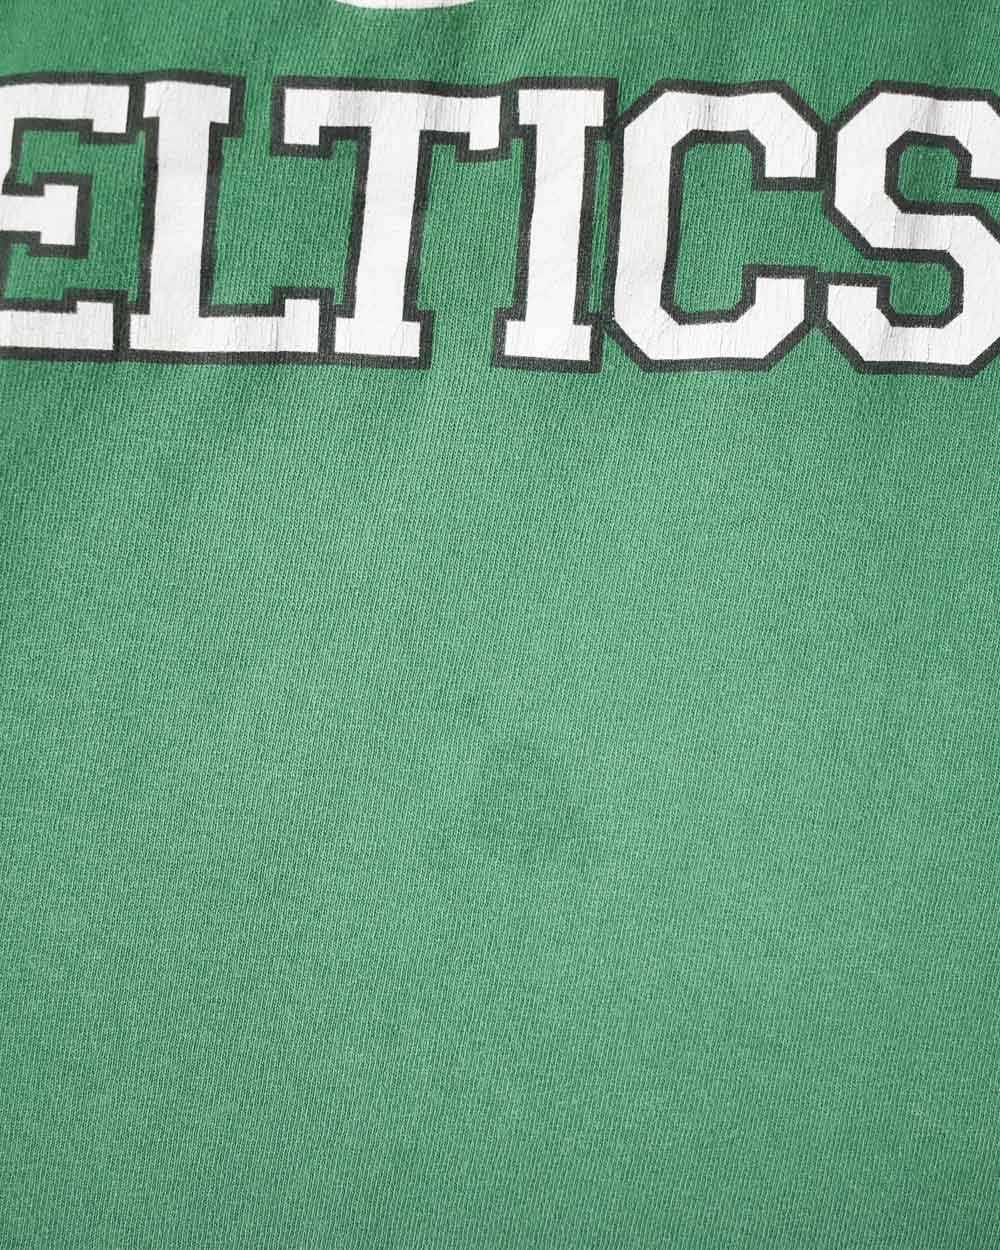 Green NBA Boston Celtics T-Shirt - X-Small